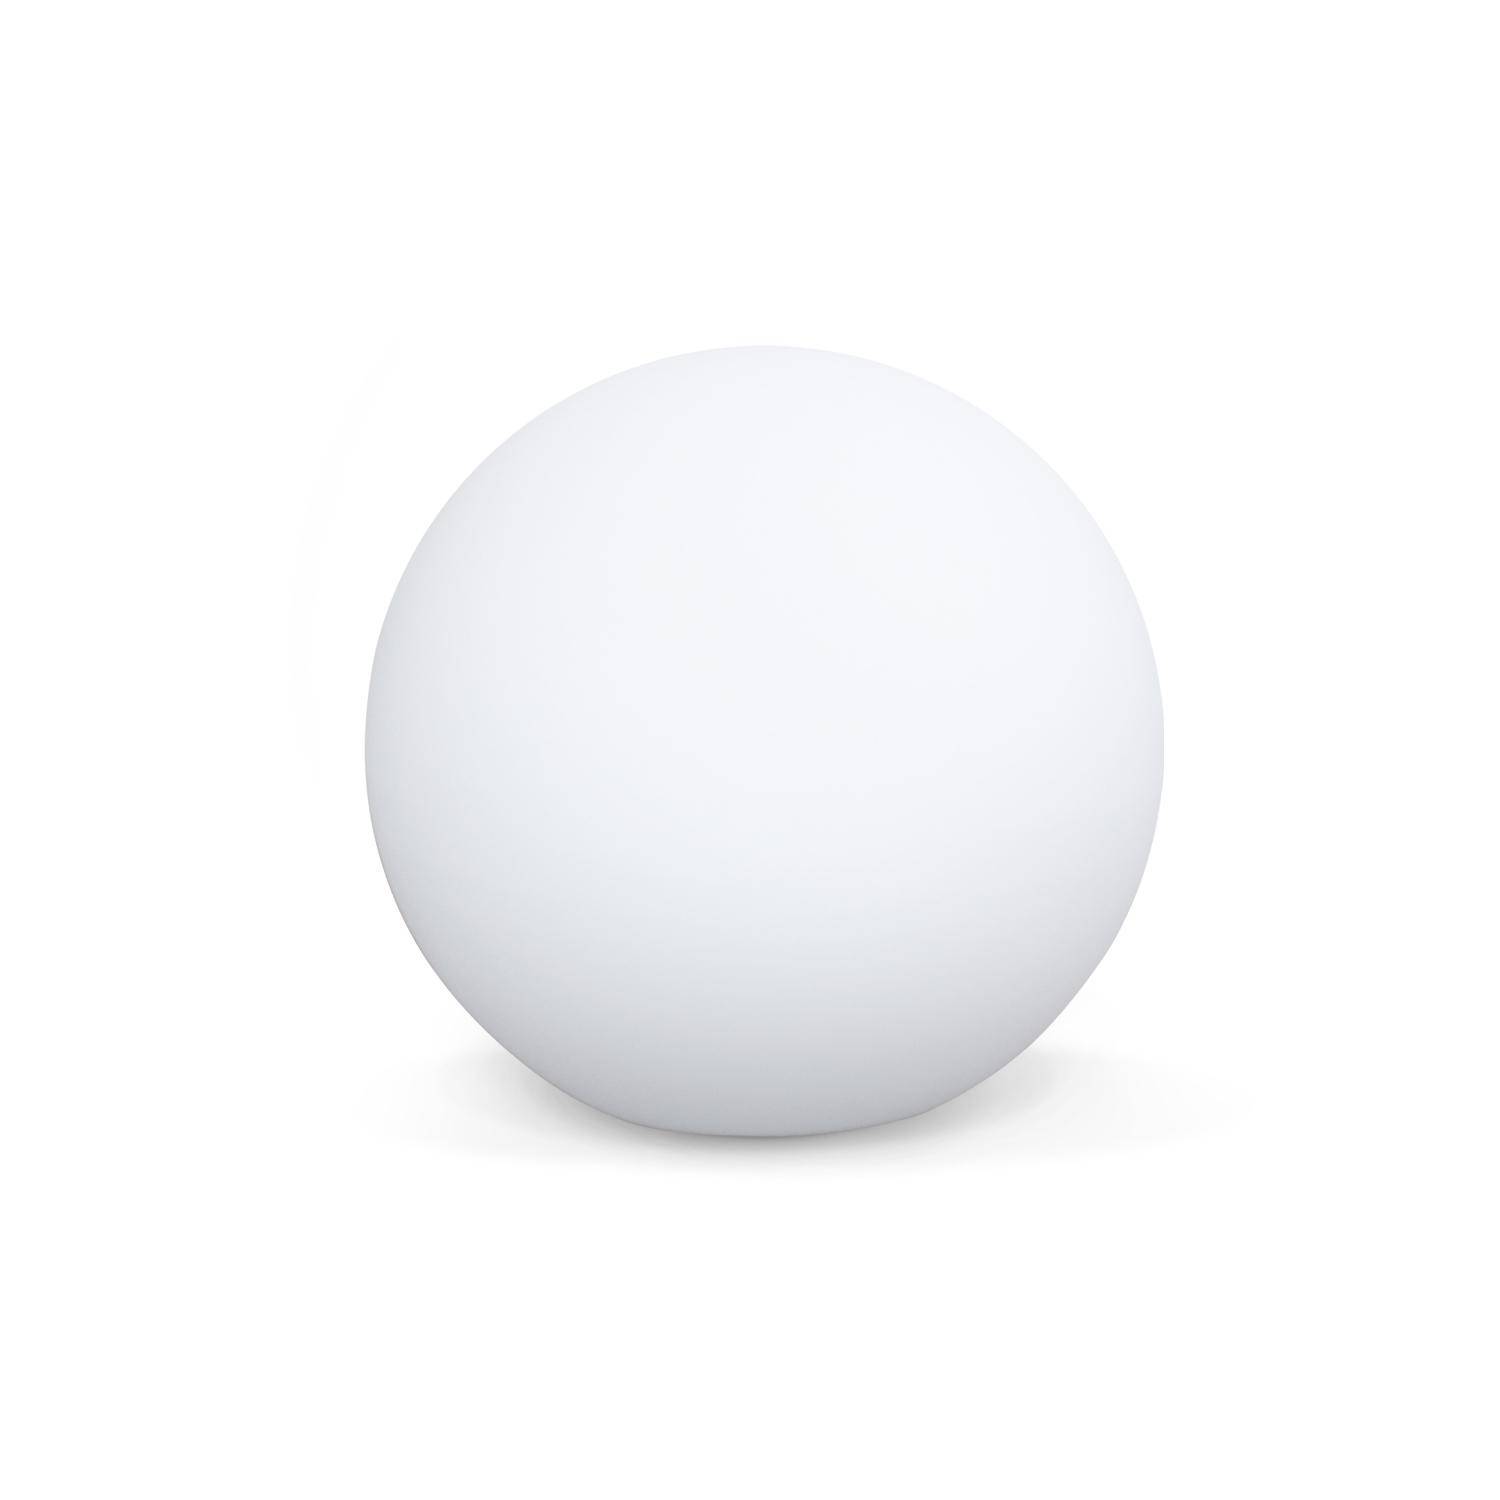 30cm spherical LED lamp – Decorative light sphere, remote control, Warm white Photo3